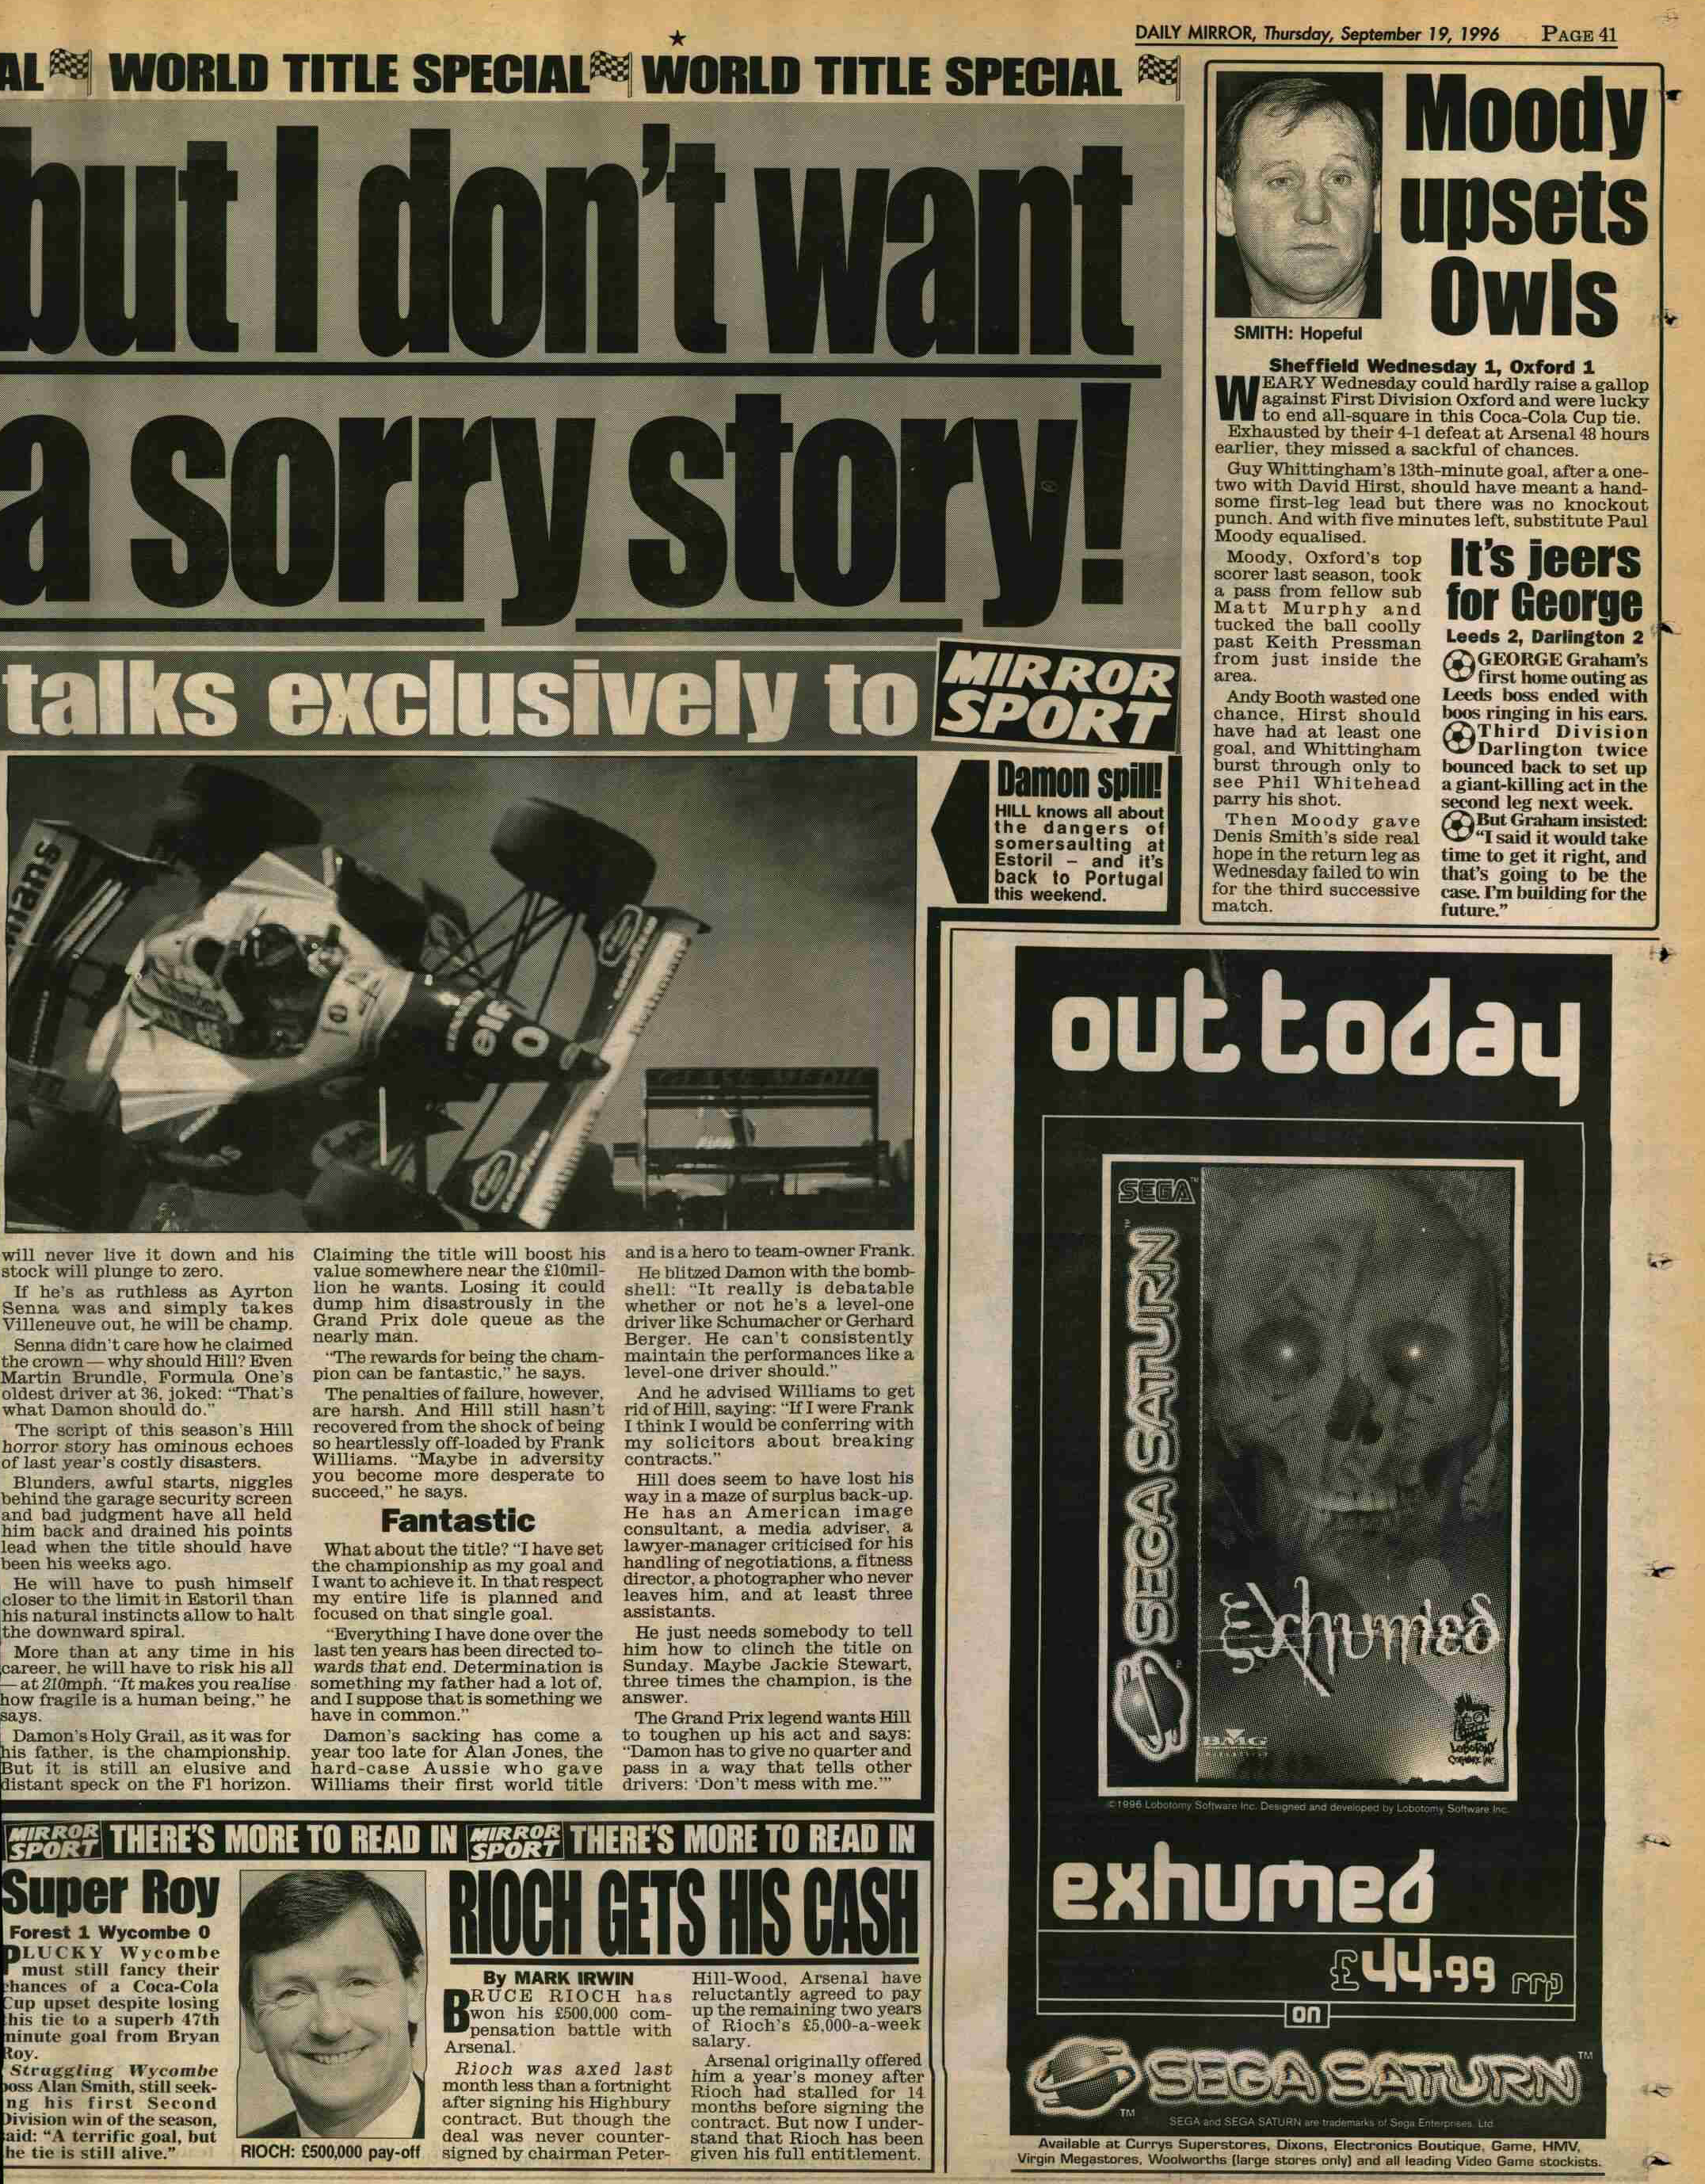 DailyMirror UK 1996-09-19 42.png